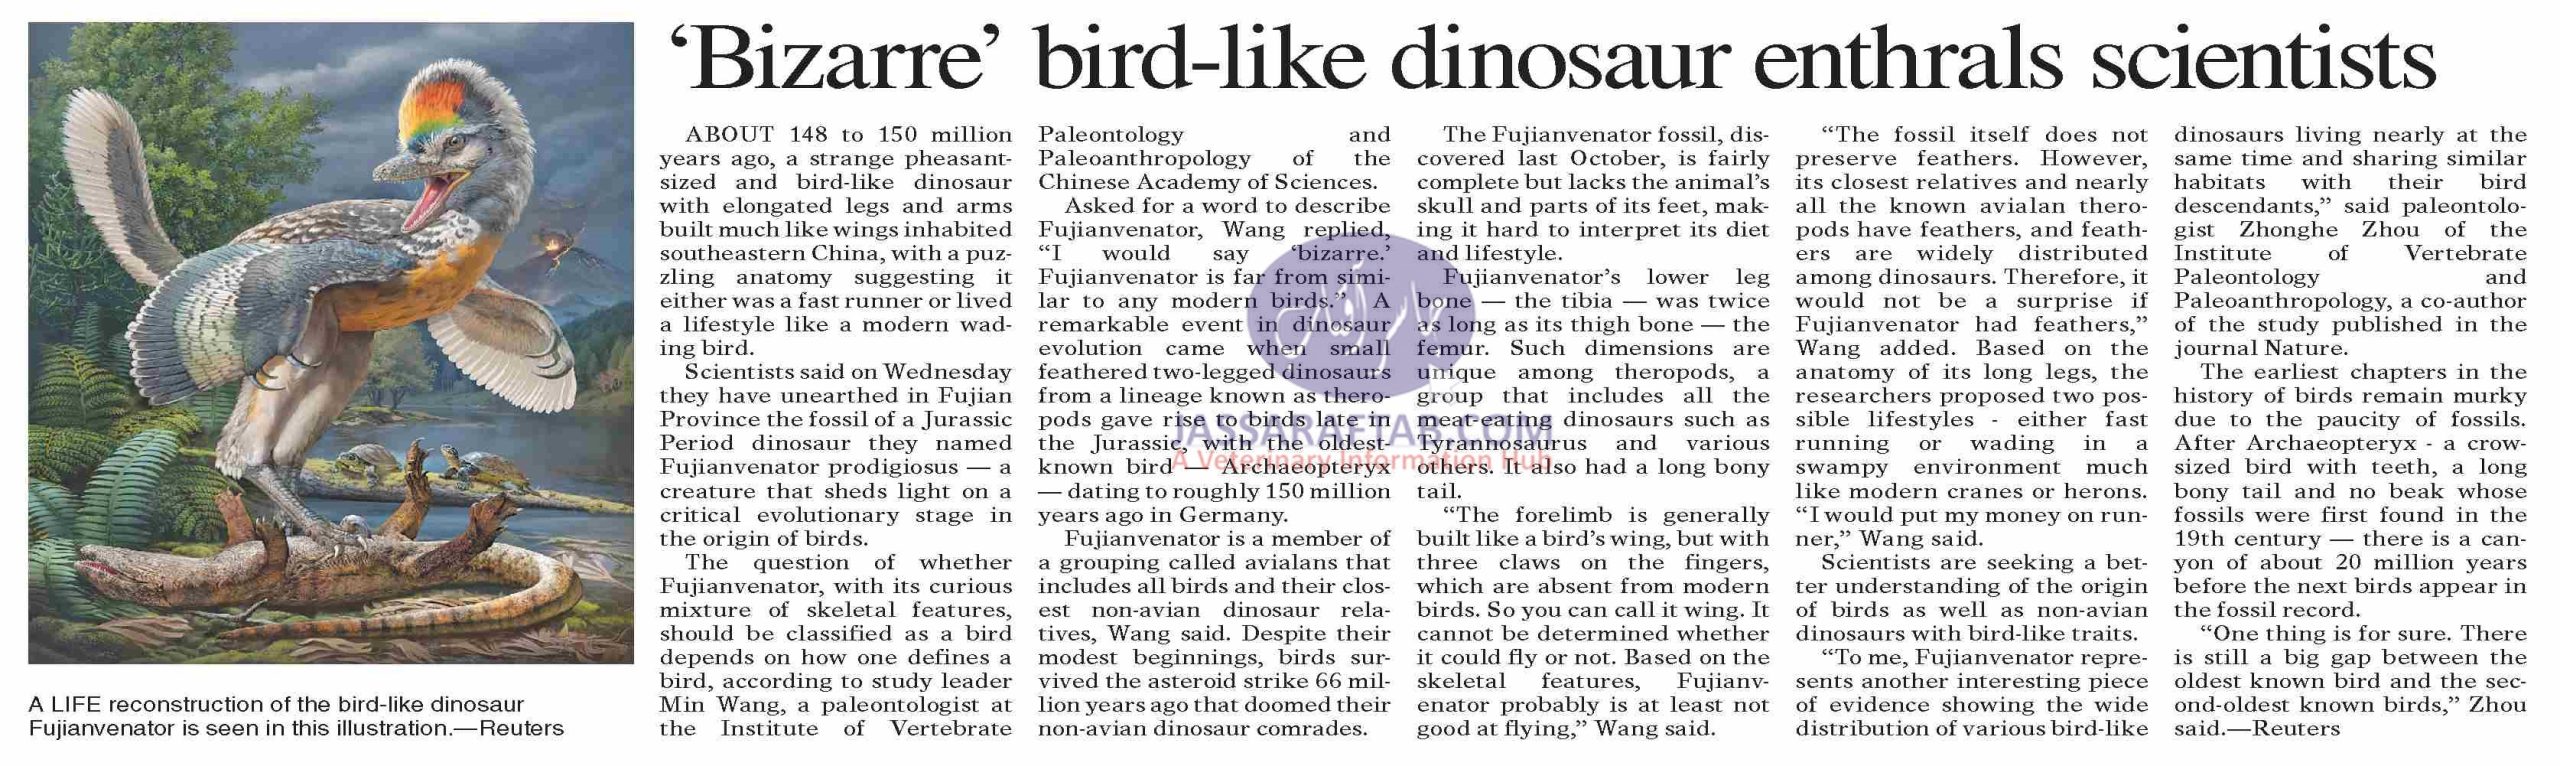 Bizarre bird-like dinosaur fossil